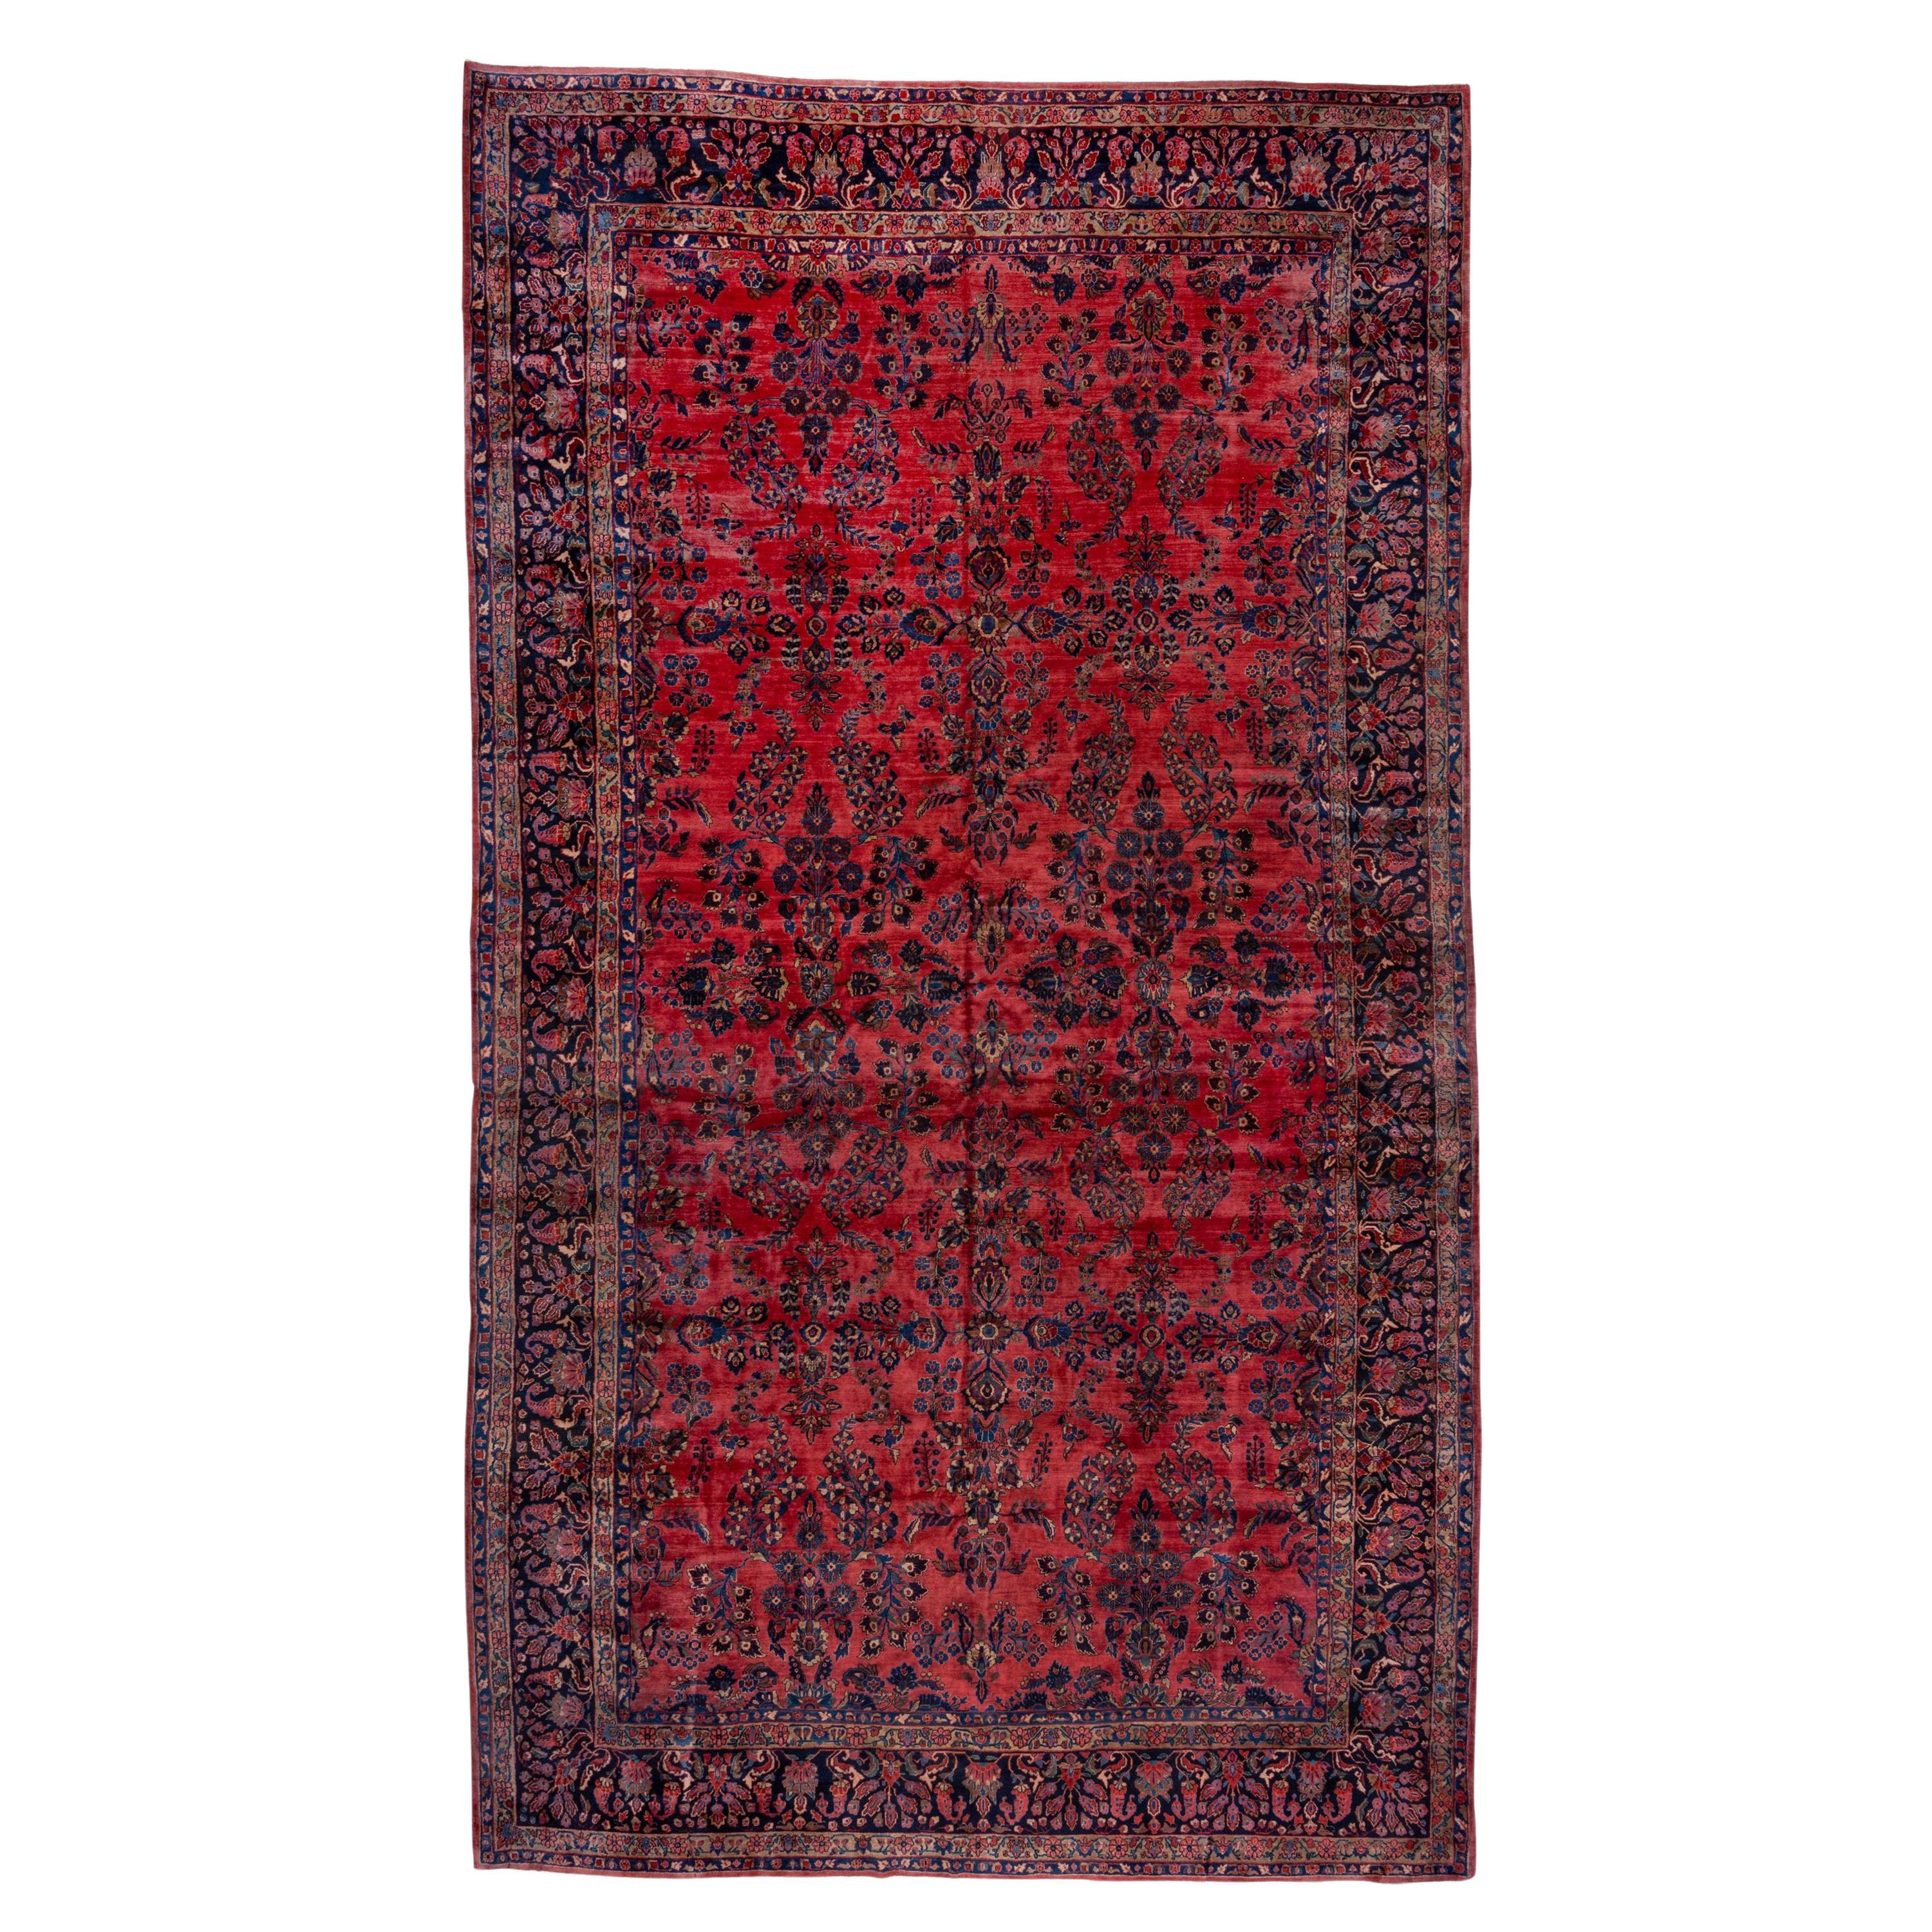 Antique Red Sarouk Carpet, Excellent Condition For Sale